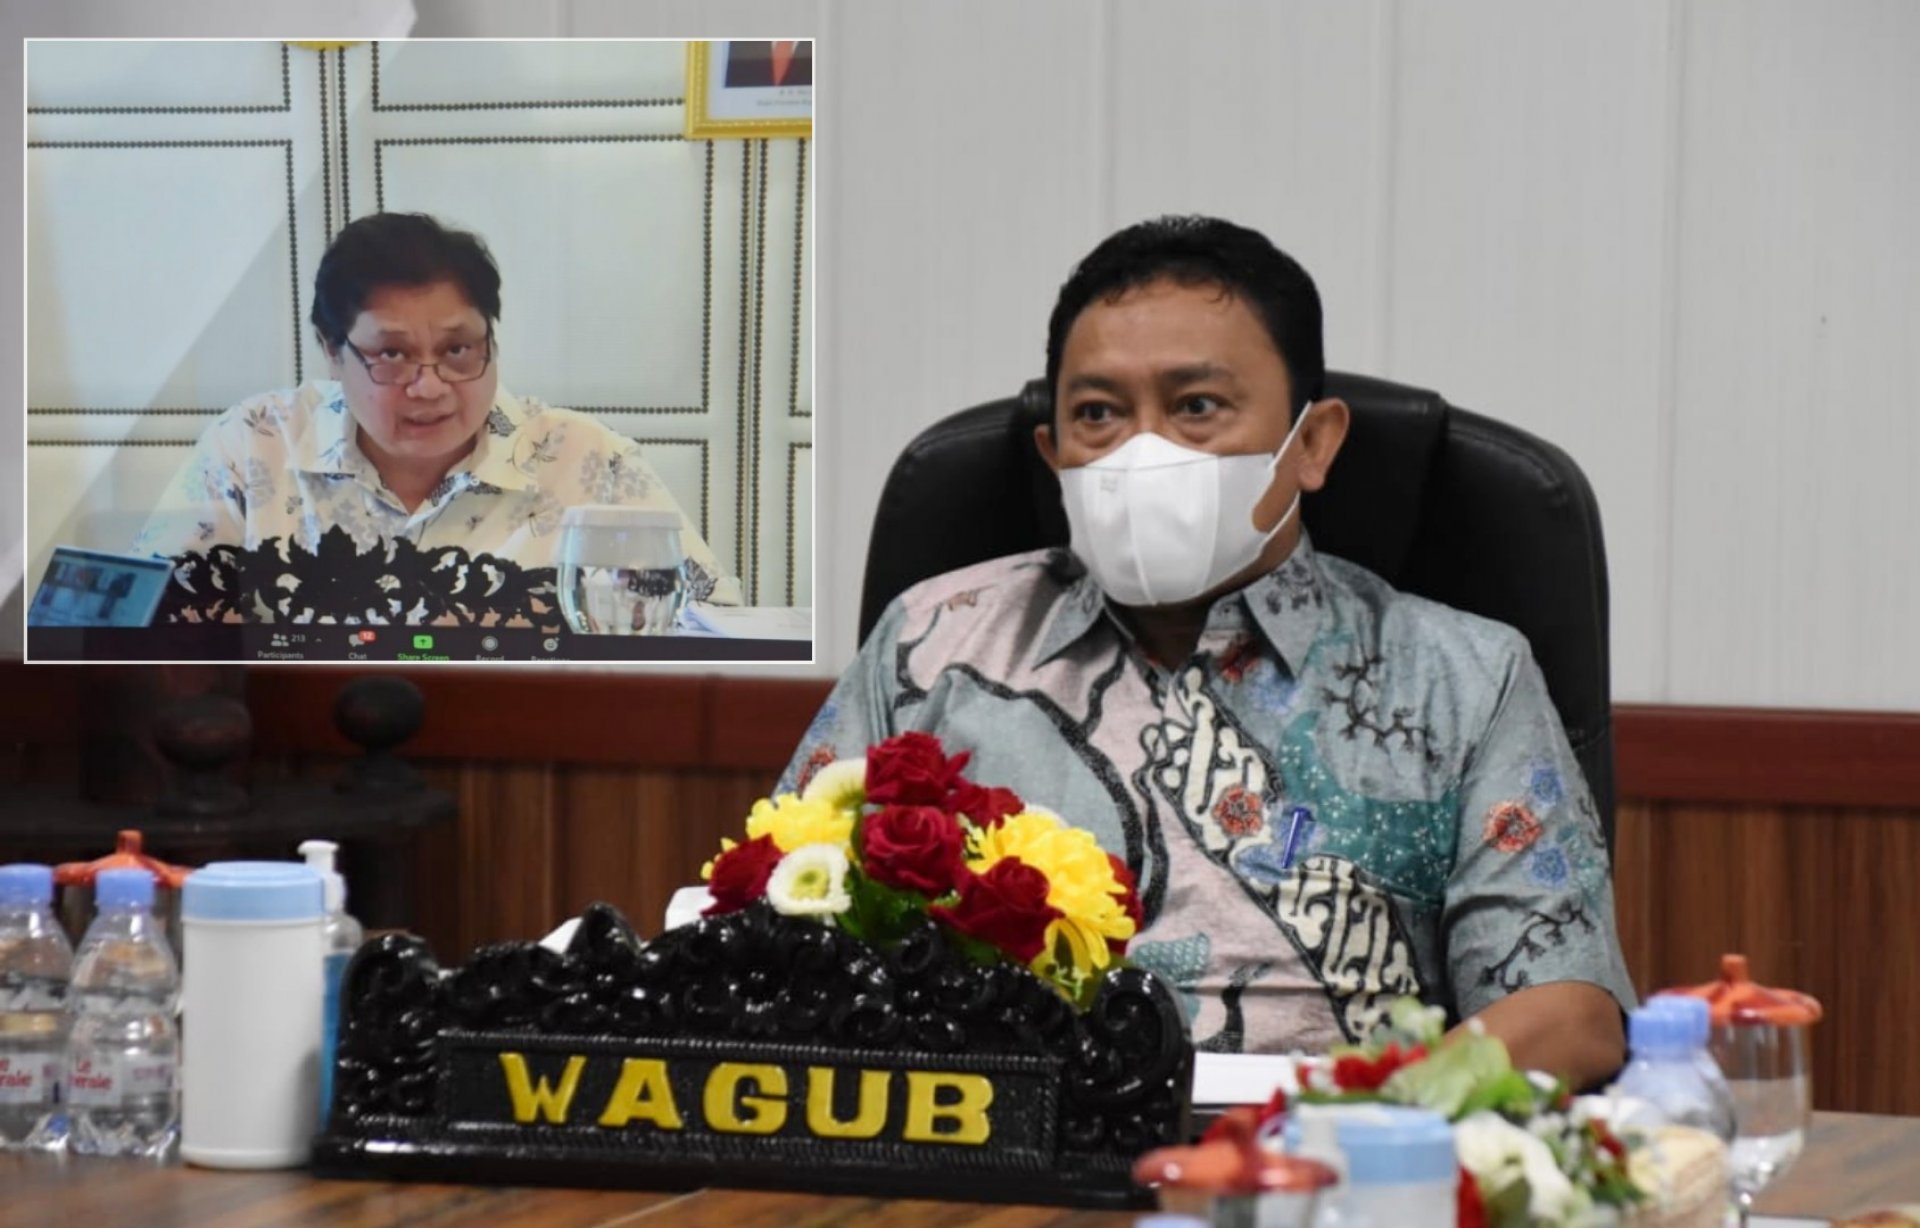 Wagub Kalteng Hadiri Rakor Monev PPKM Level 4 Luar Jawa-Bali Secara Virtual